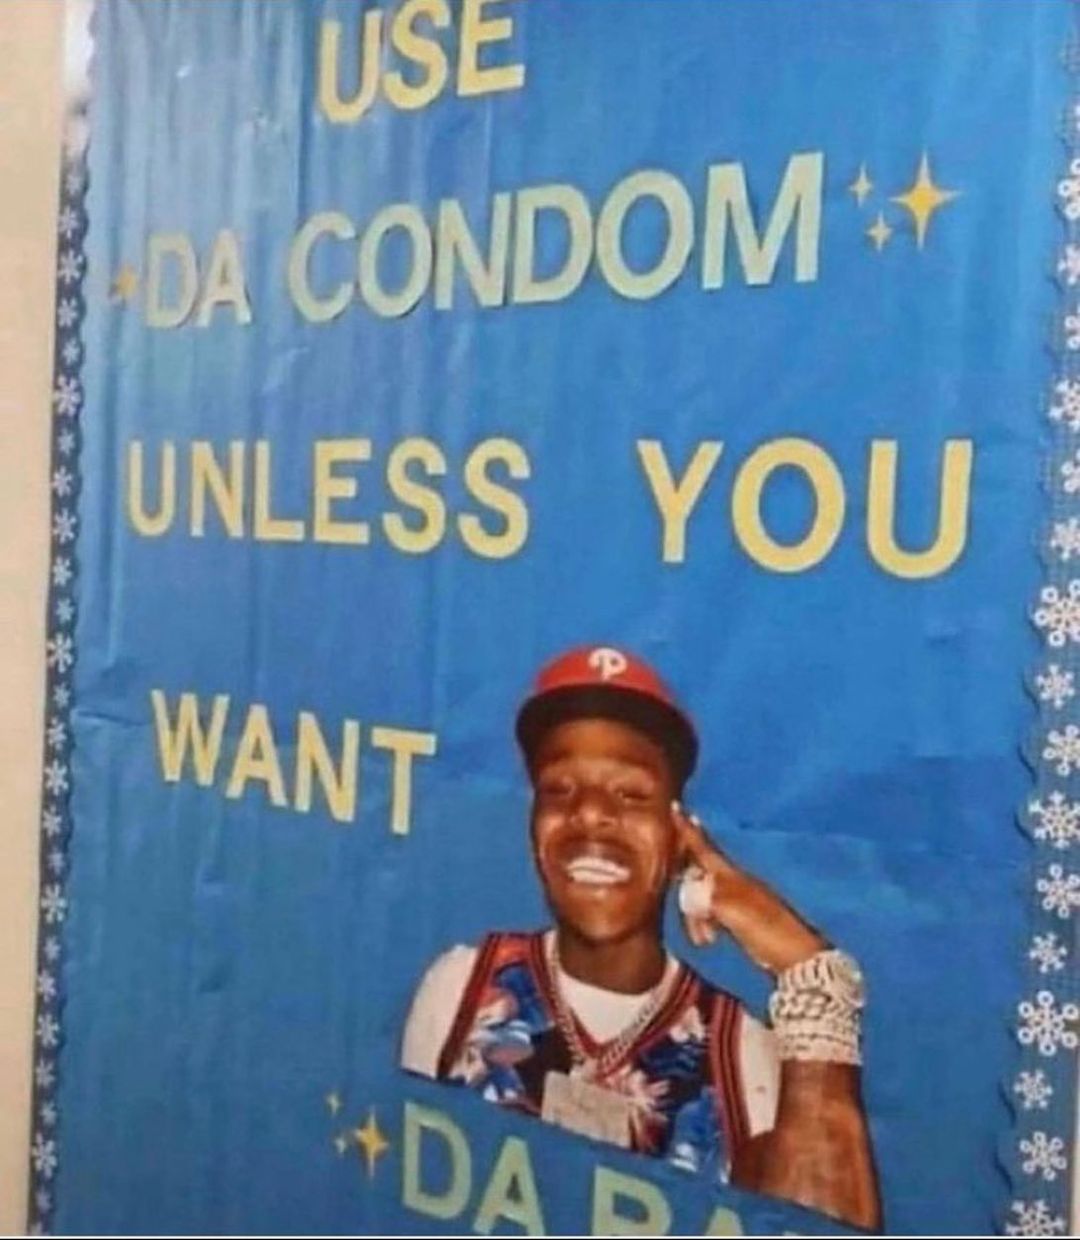 dababy condom meme - Use Da Condom Unless You Want 33 Dad